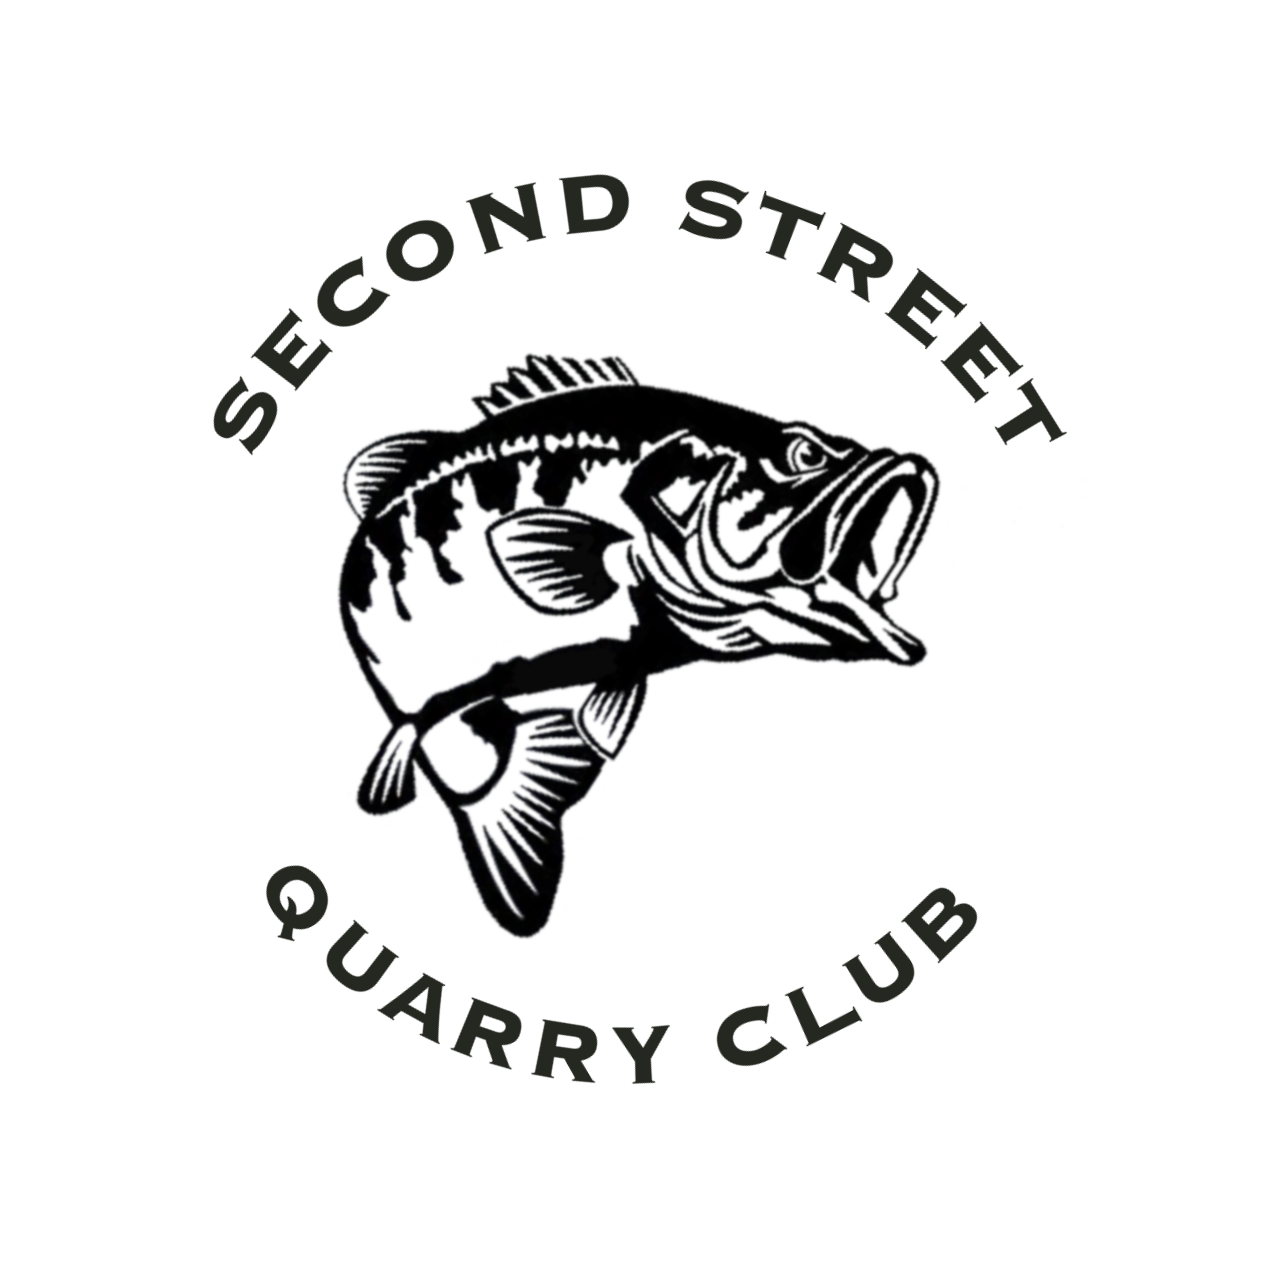 Pre Apply For Membership Second Street Quarry Club